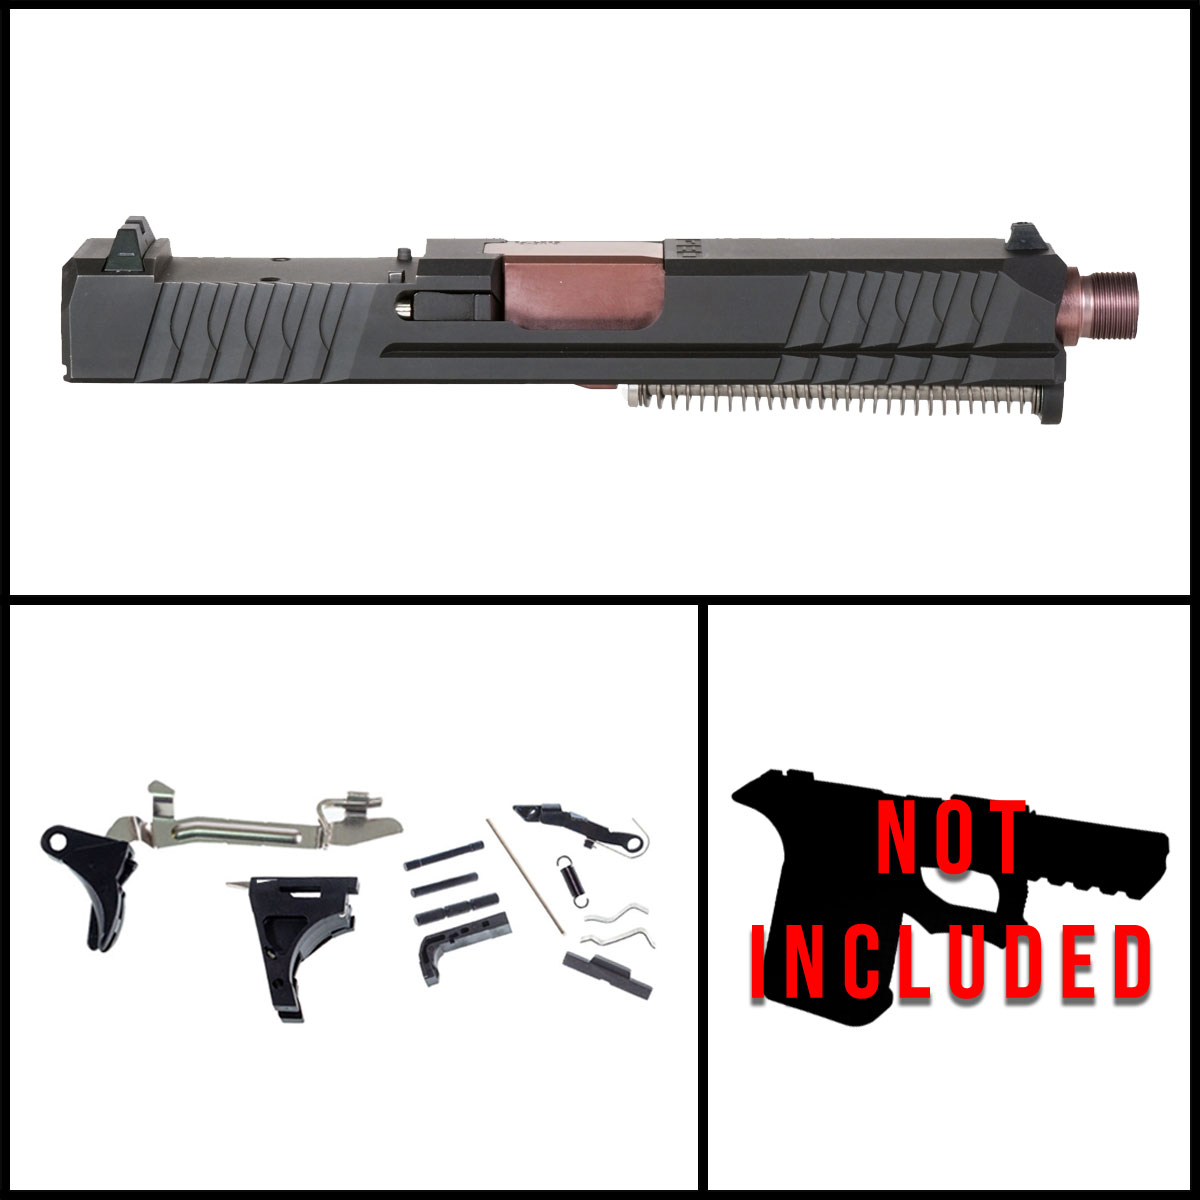 DTT 'Catan' 9mm Full Gun Kit - Glock 19 Gen 1-3 Compatible